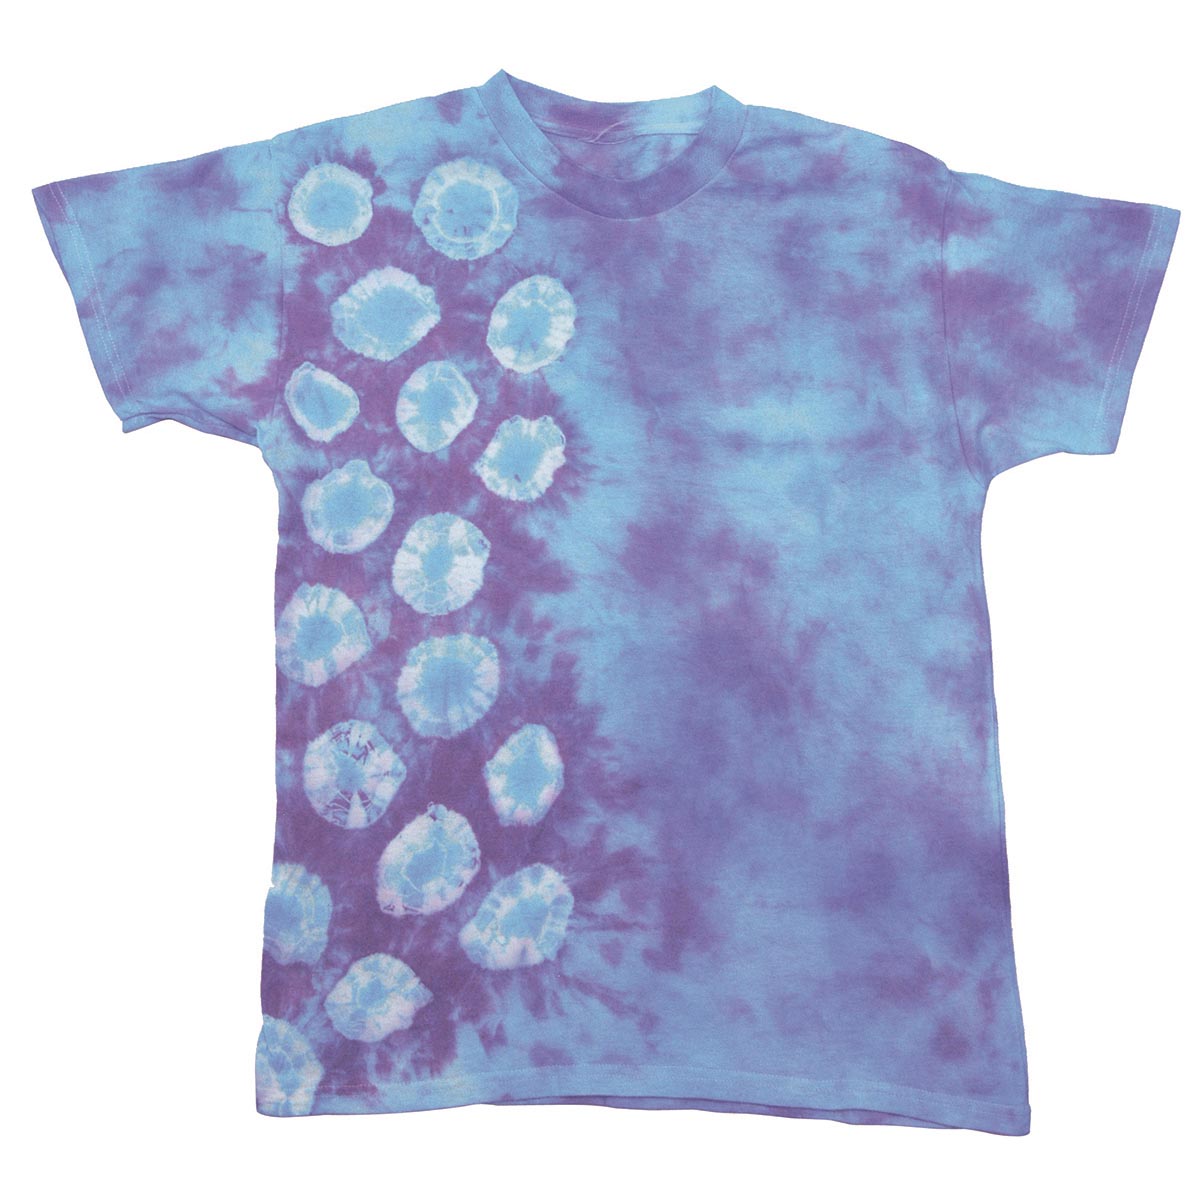 Jacquard  Tie-Dye Kit for T-Shirts - Amethyst Jewel Tone